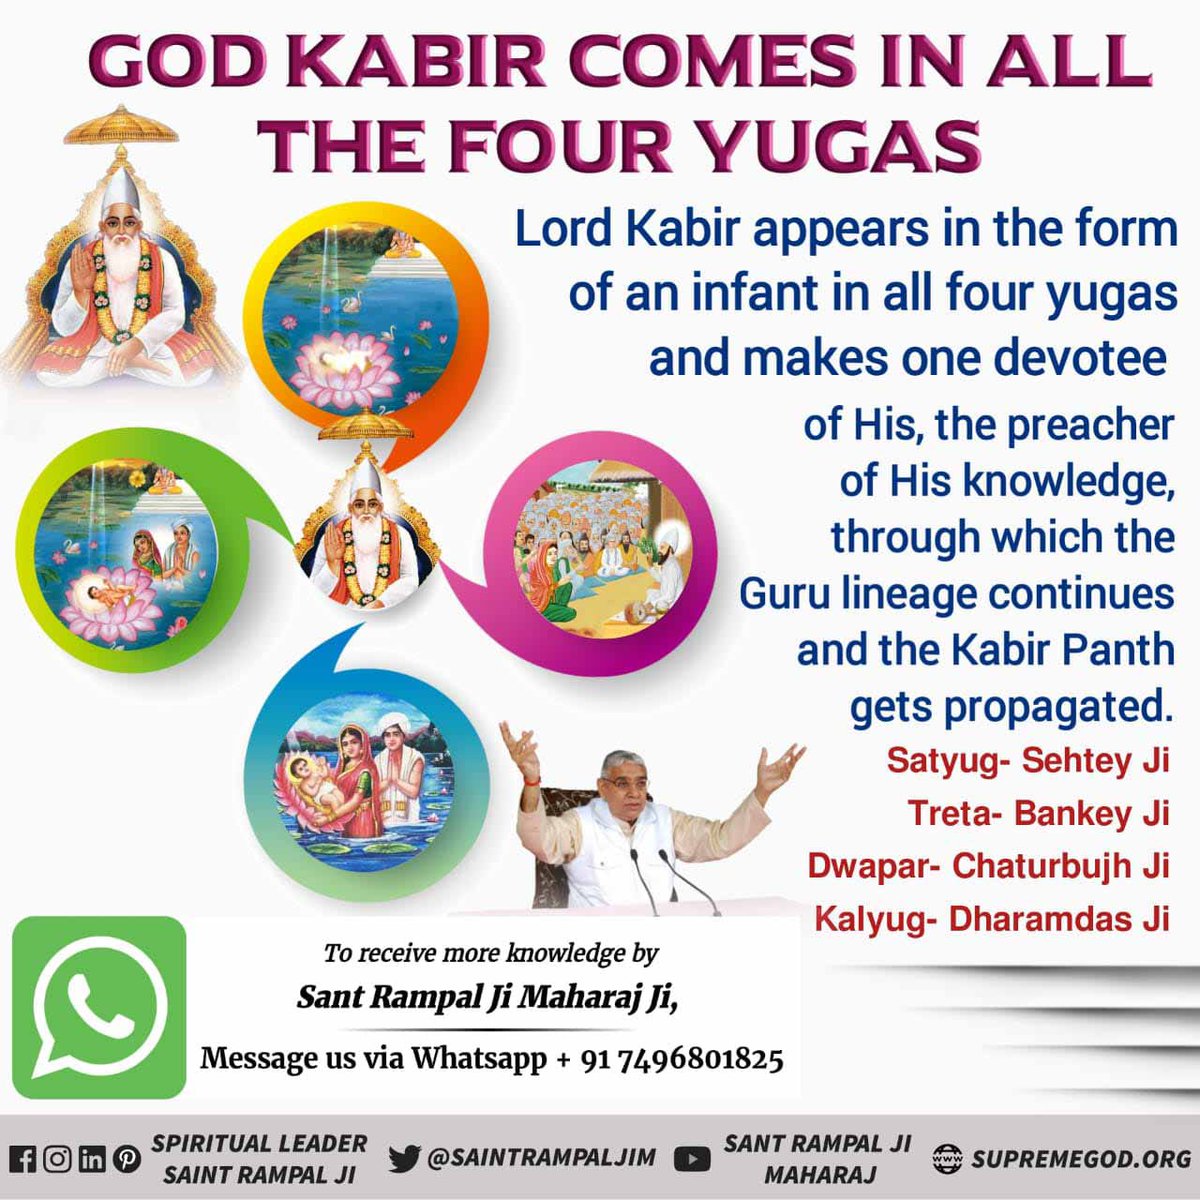 #अविनाशी_परमात्मा_कबीर
GOD KABIR COMES IN ALL THE  
FOUR YUGAS
 
To receive more knowledge by Sant Rampal Ji Maharaj Ji,

Message us via Whatsapp + 91 7496802825
Sant Rampal Ji Maharaj